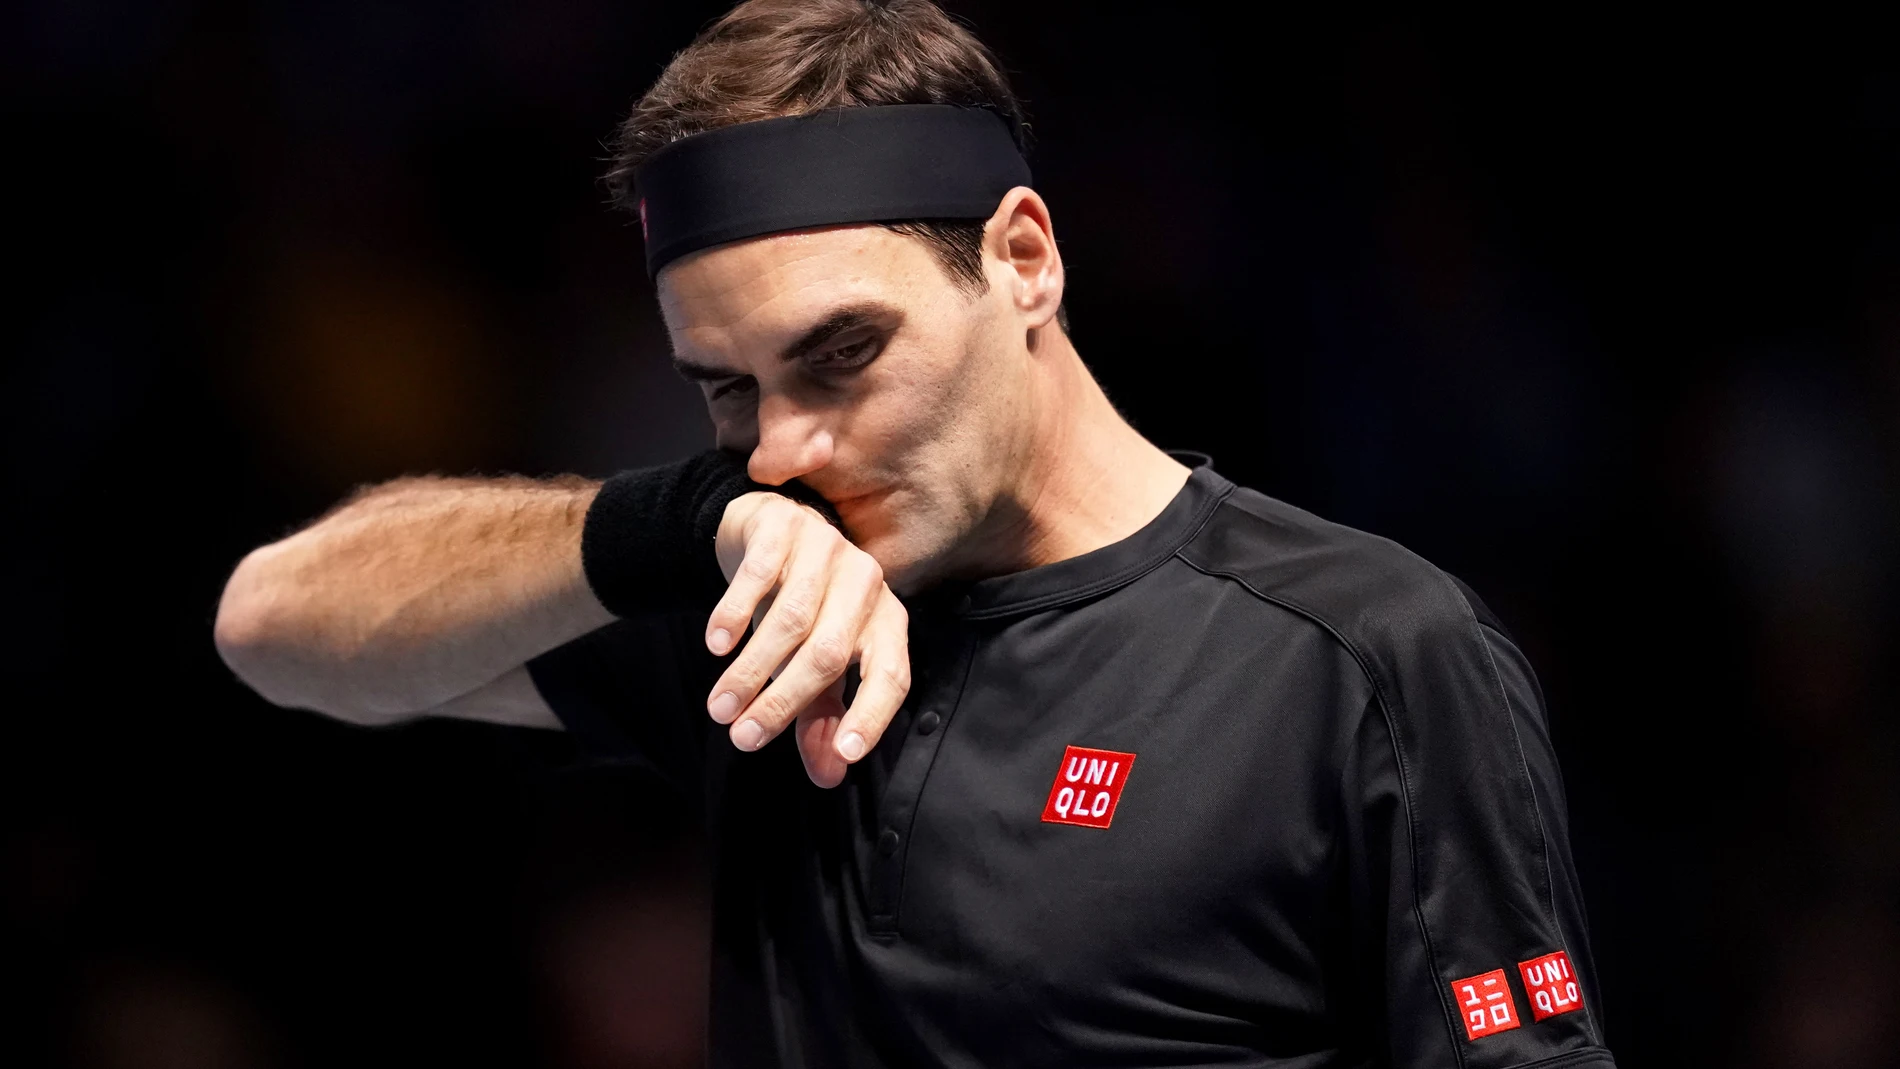 Swiss tennis player Roger Federer